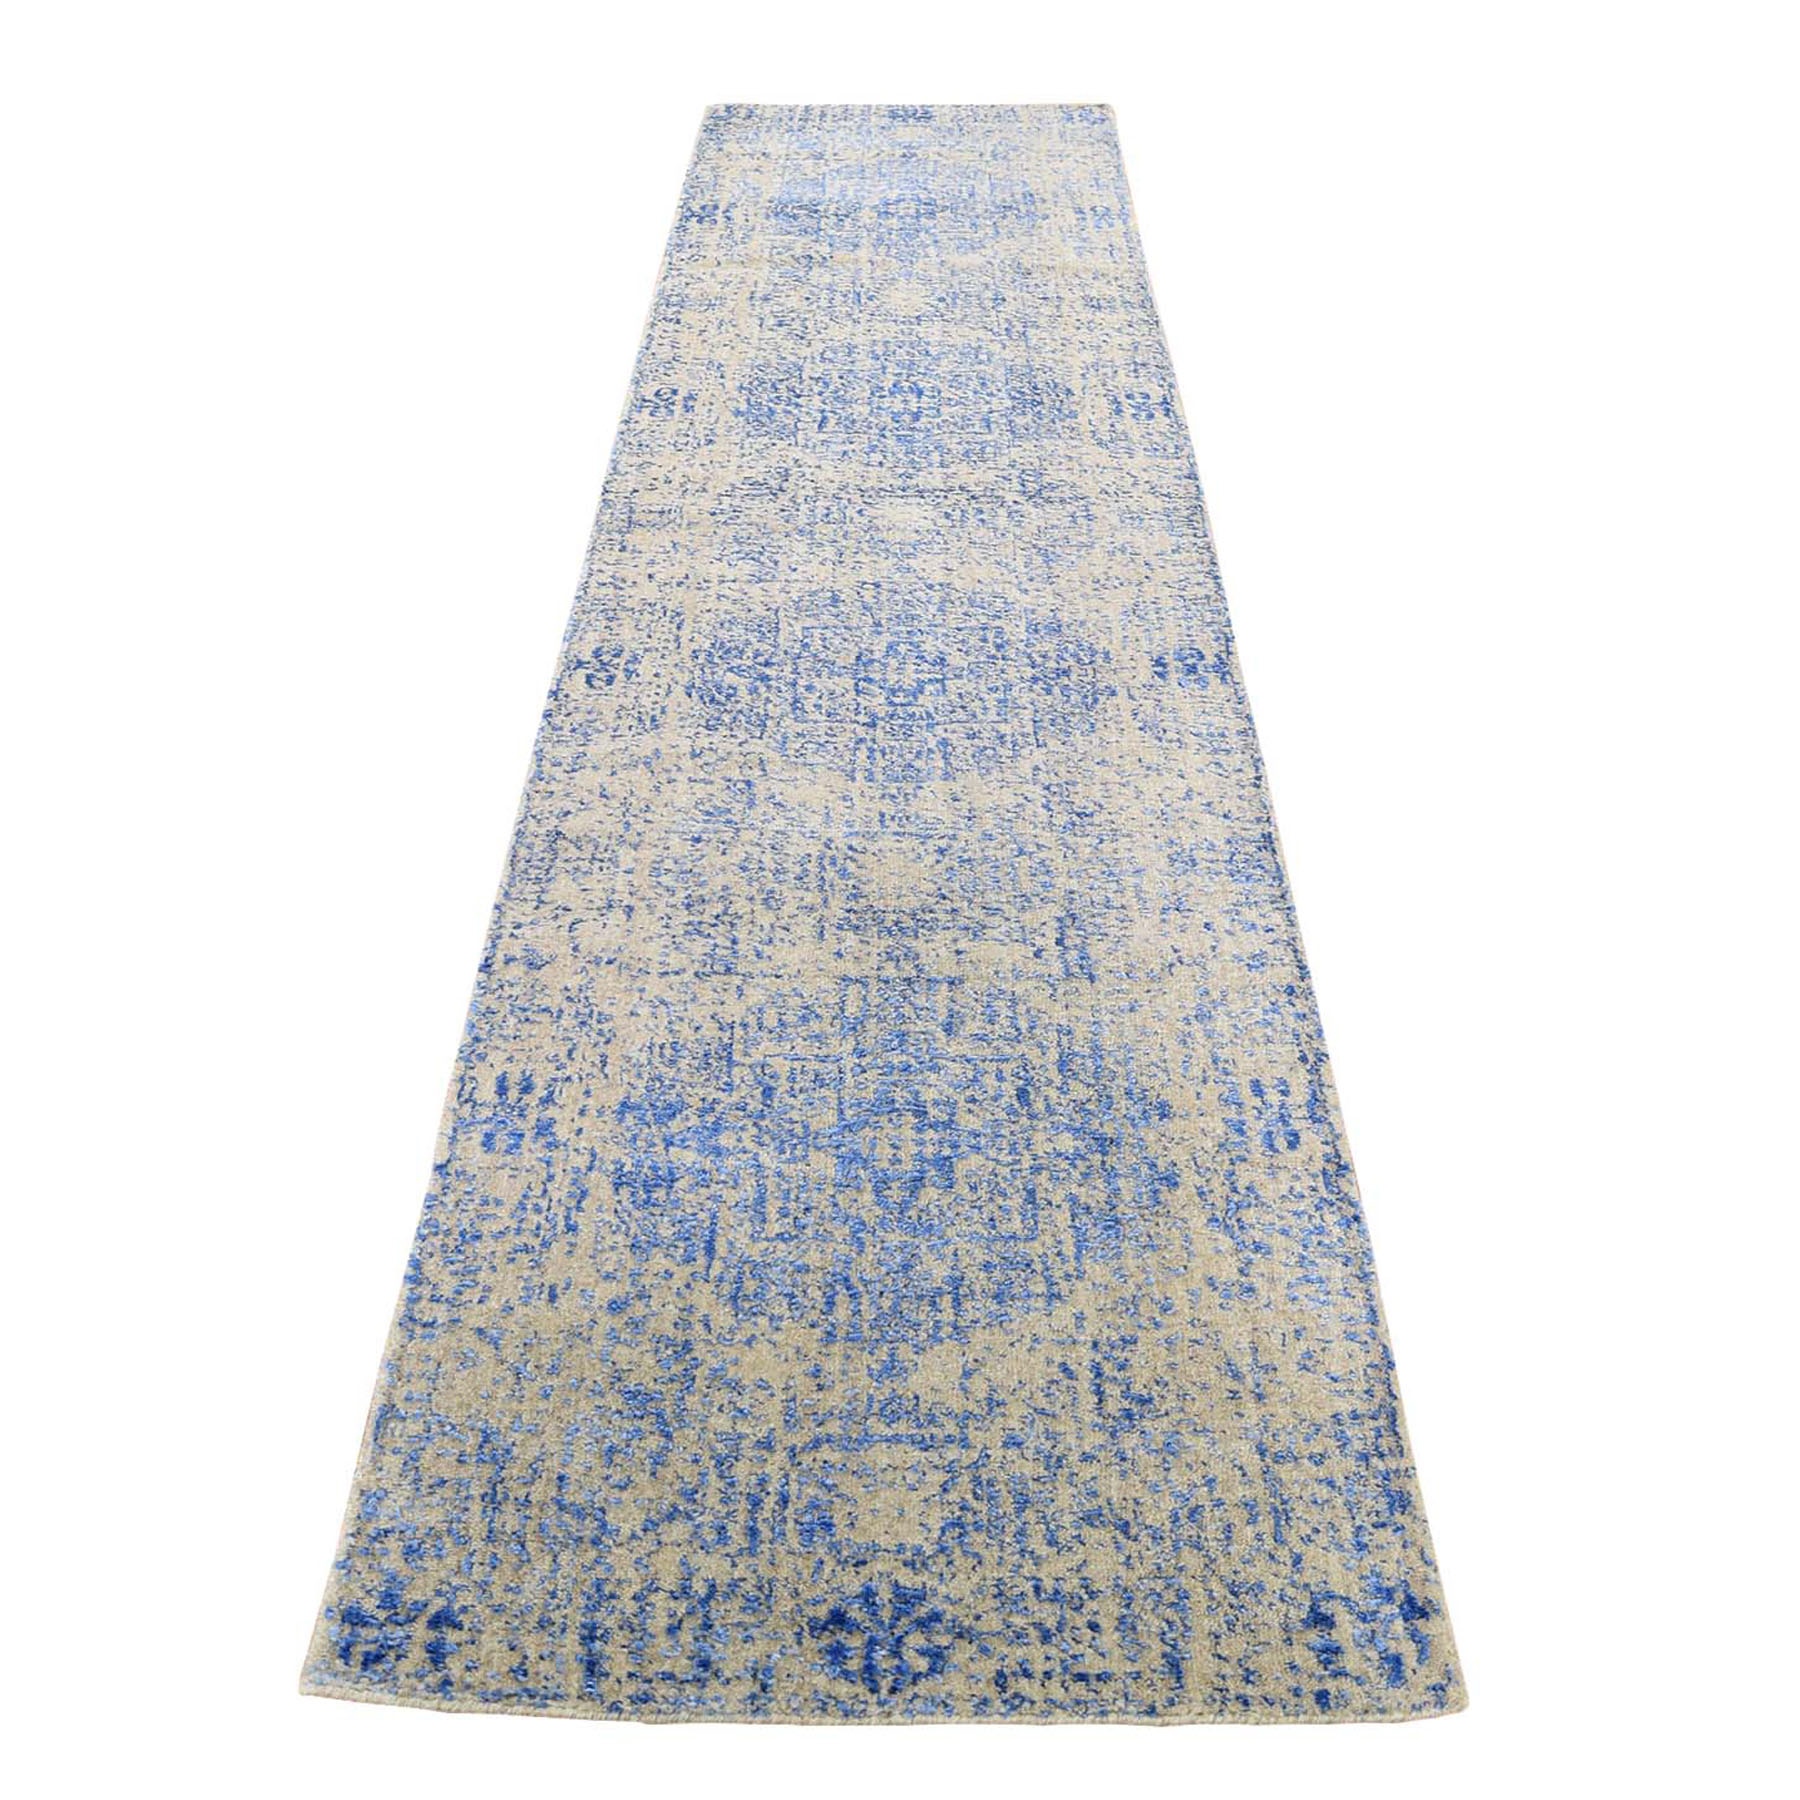 2'5"X10' Wool And Silk Mamluk Design Jacquard Hand Loomed Runner Oriental Rug moad9aab